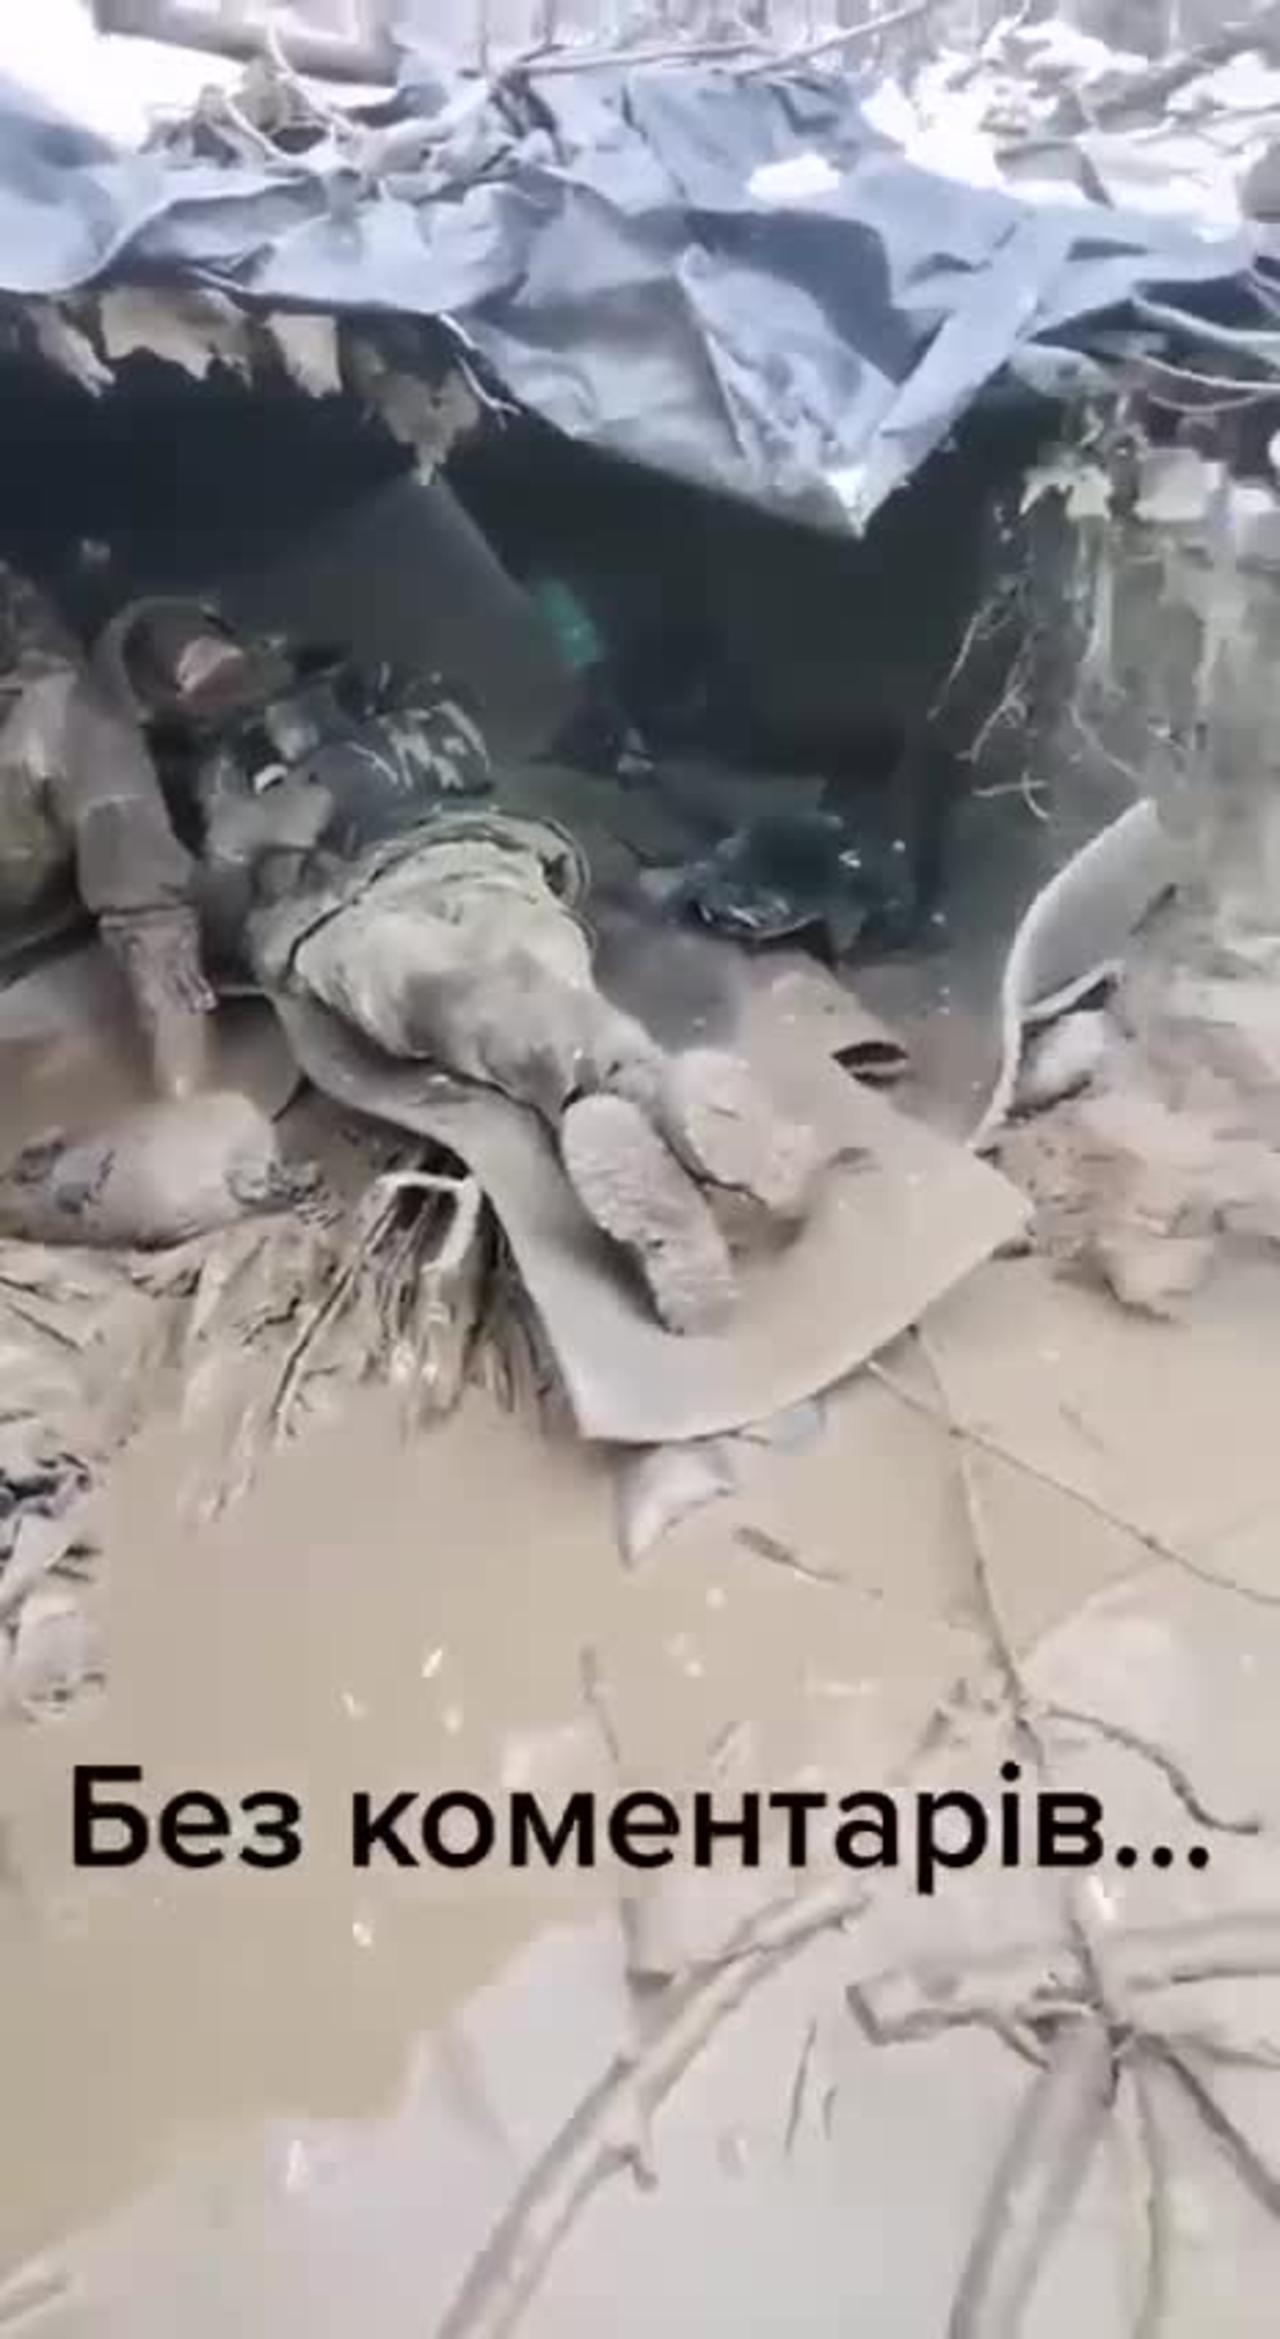 Bakhmut, Ukraine: Ukraine military trenches flooded and muddy